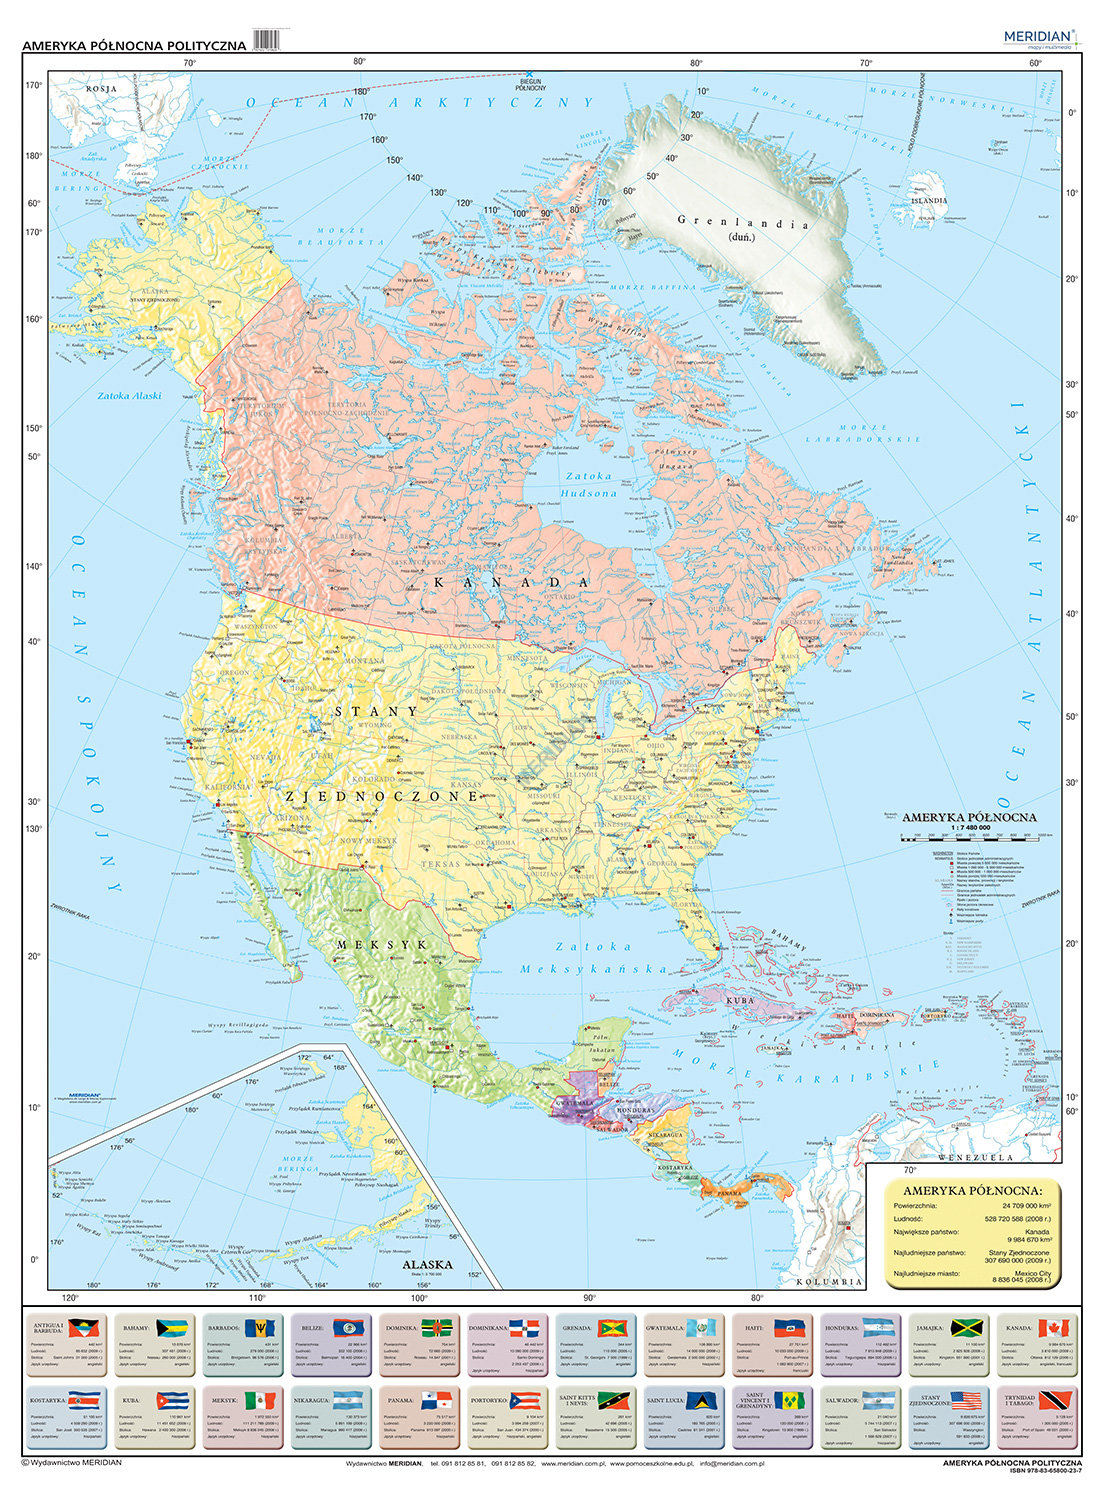 Ameryka Północna Kraje I Stolice Ameryka Polnocna Mapa Scienna Polityczna Images